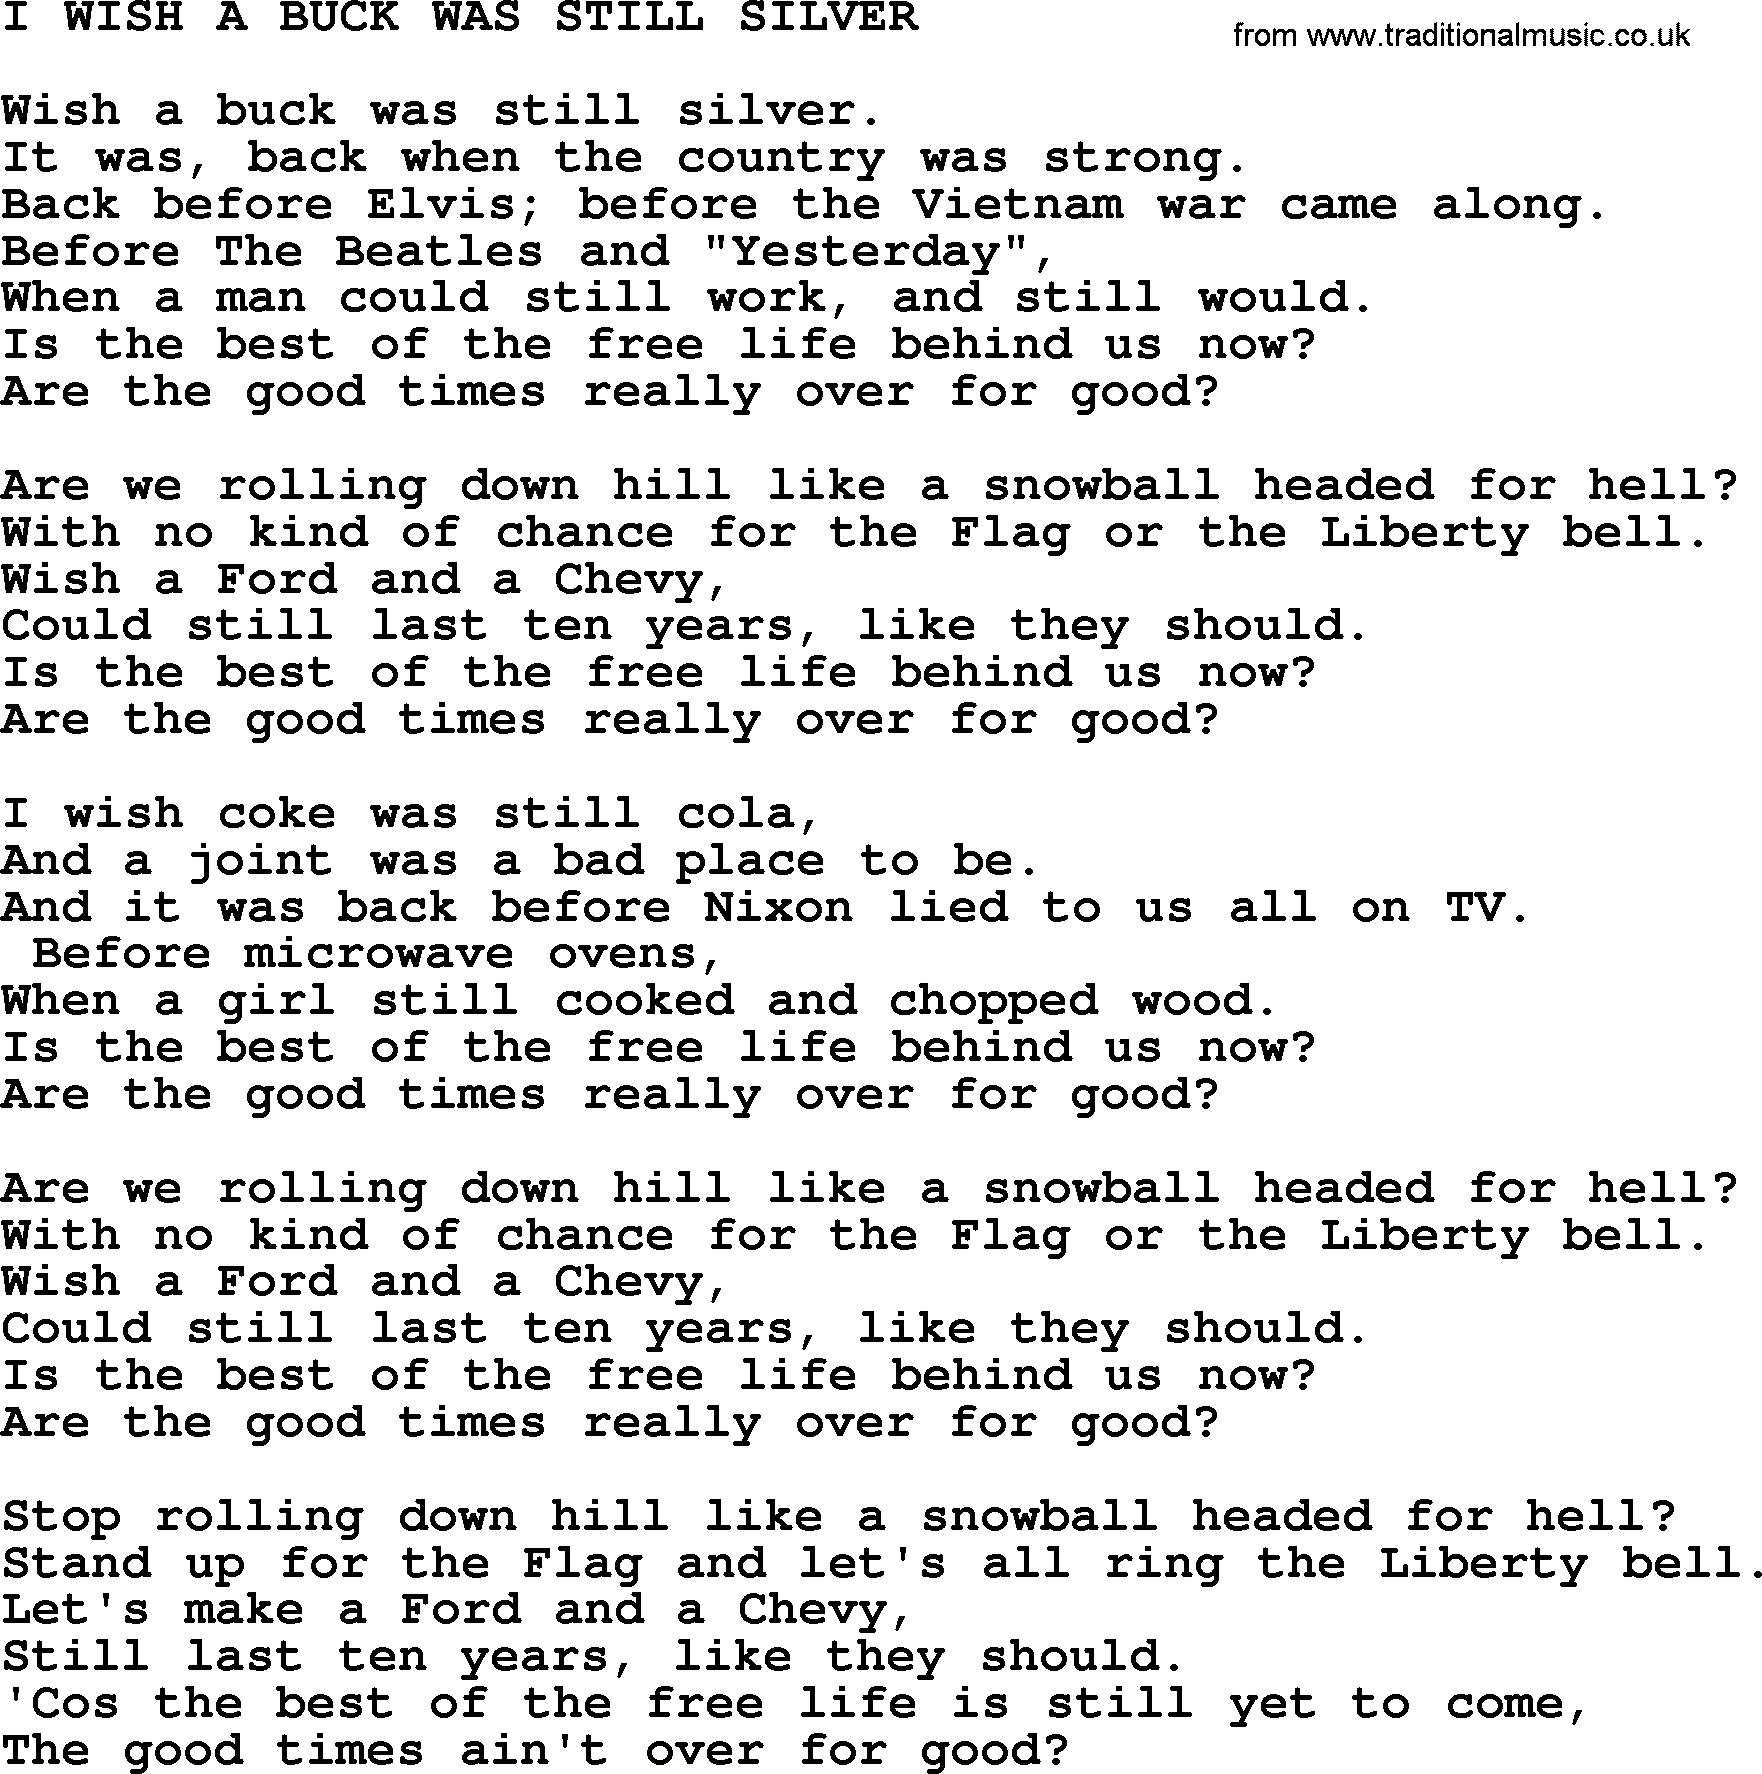 Merle Haggard song: I Wish A Buck Was Still Silver, lyrics.